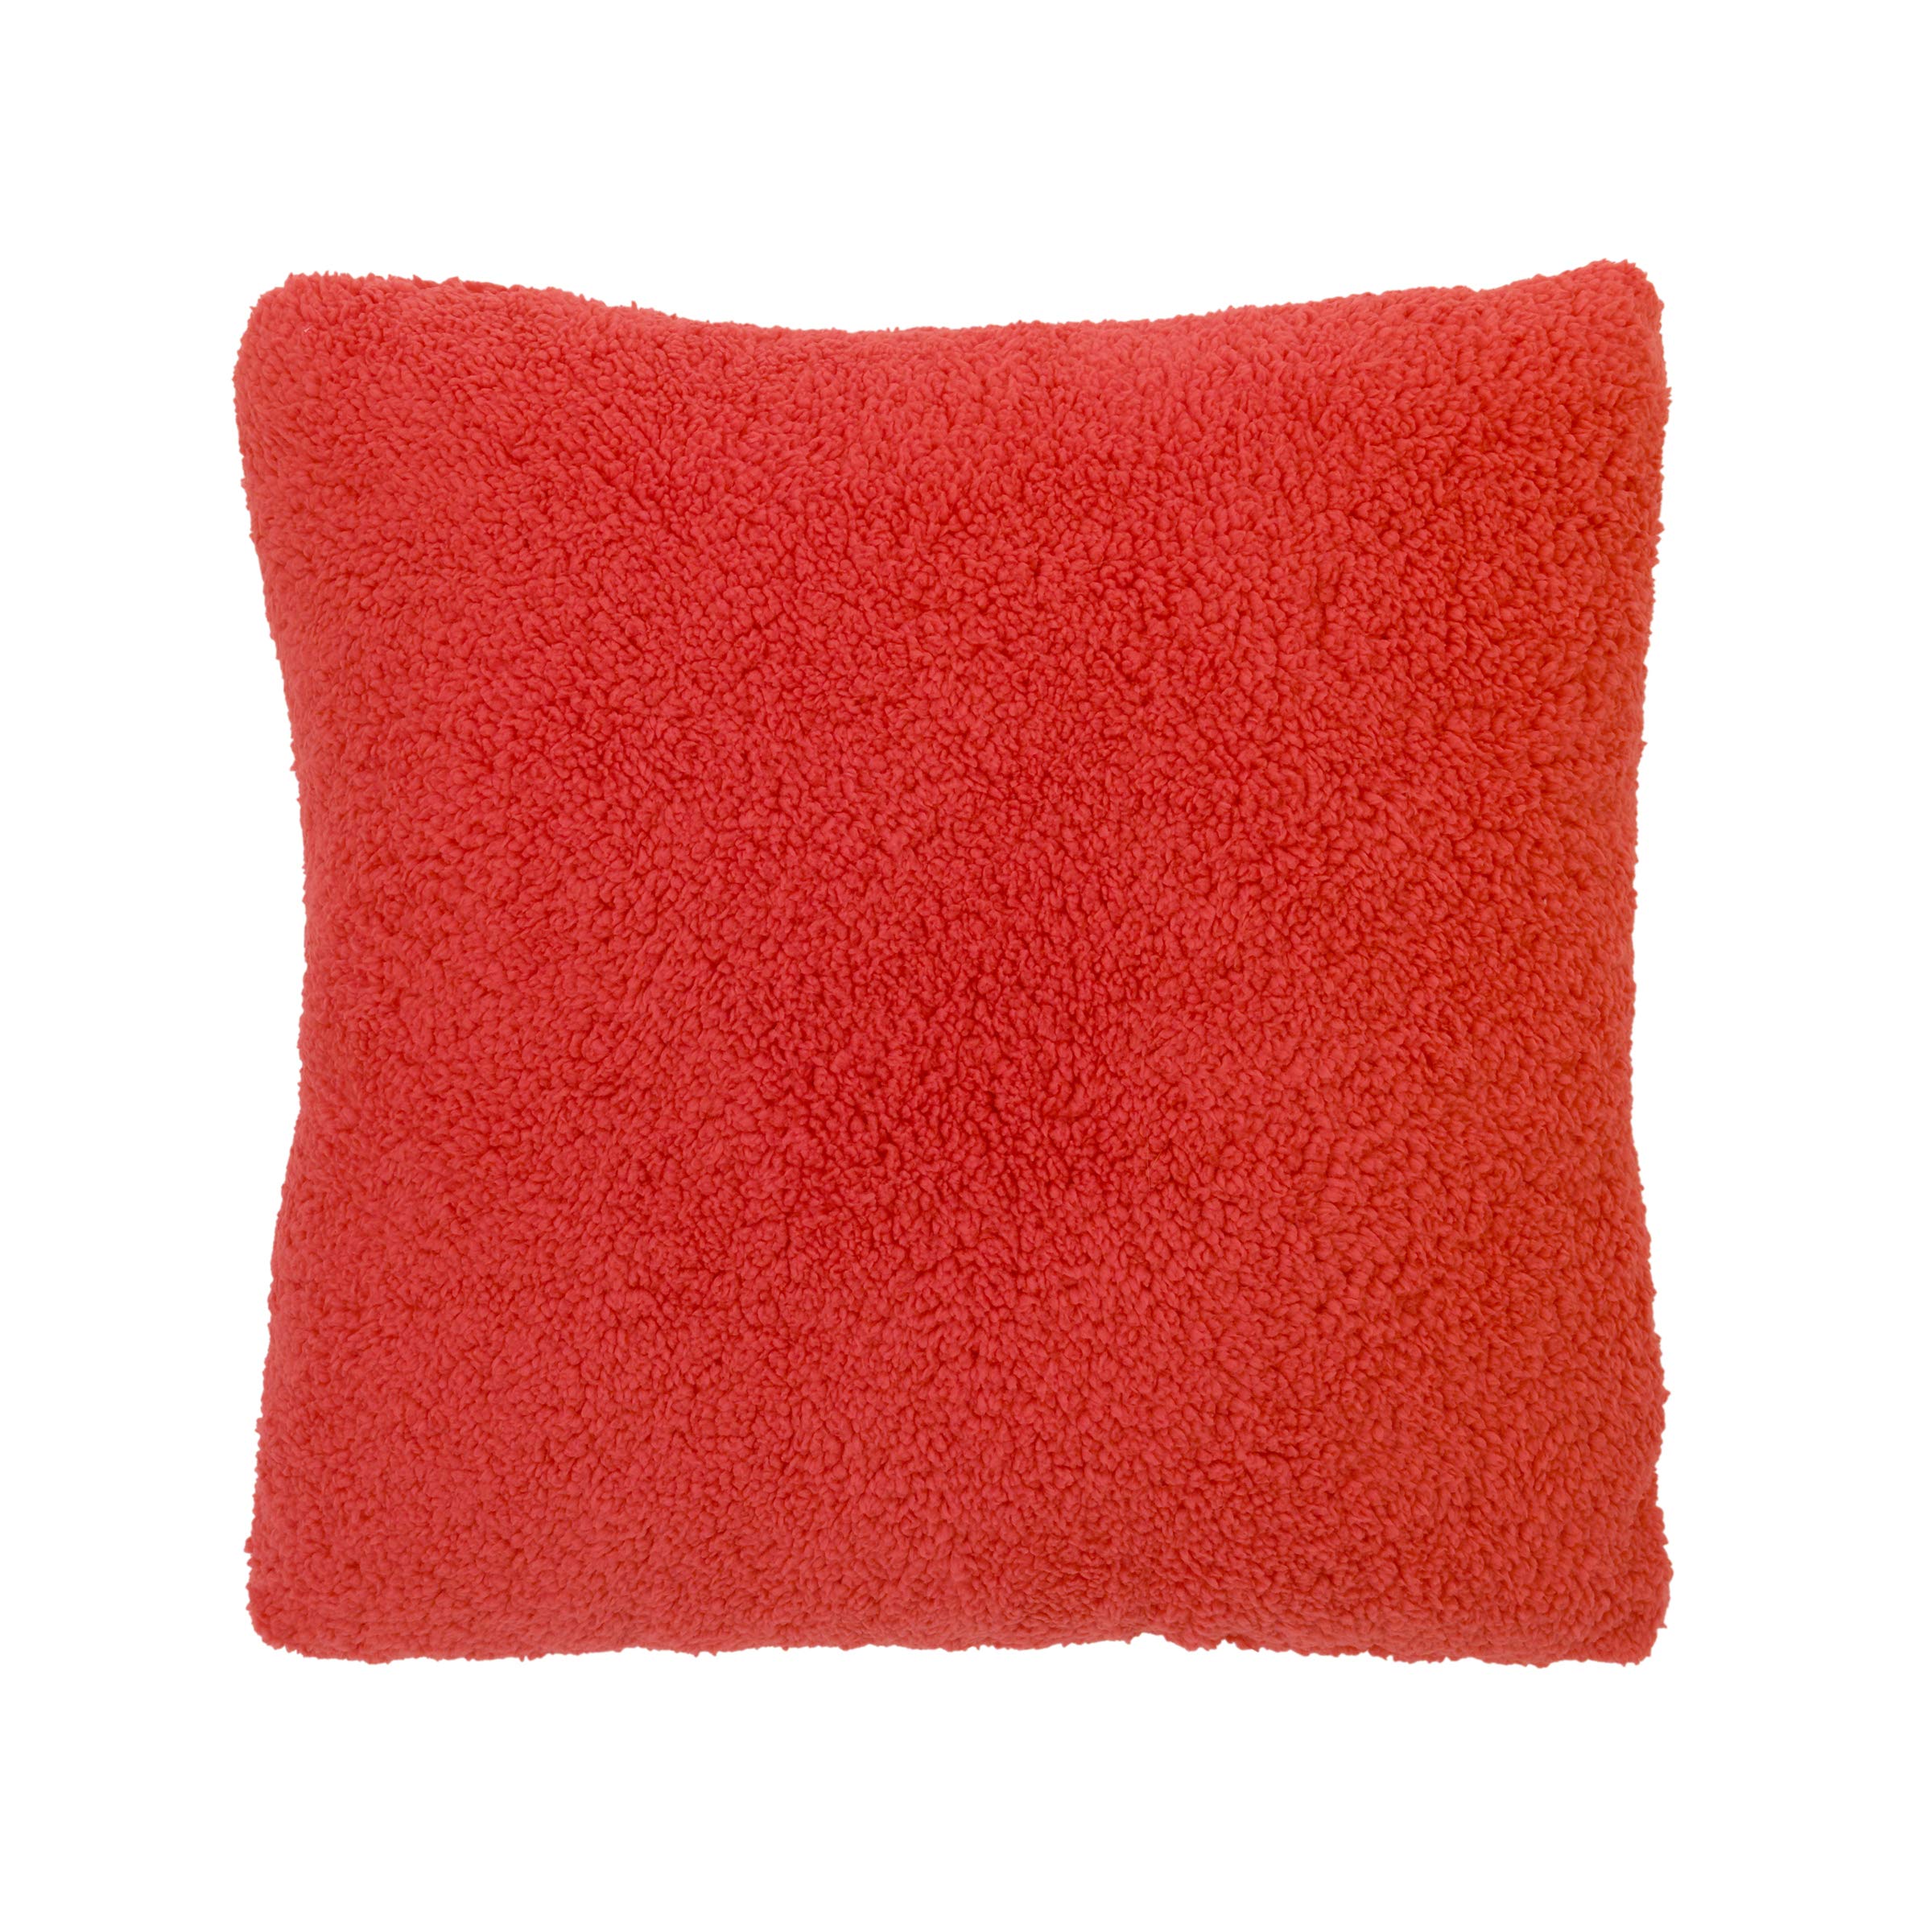 Sesame Street Elmo Red Super Soft Sherpa Toddler Pillow with Applique, Red/Orange/White/Black